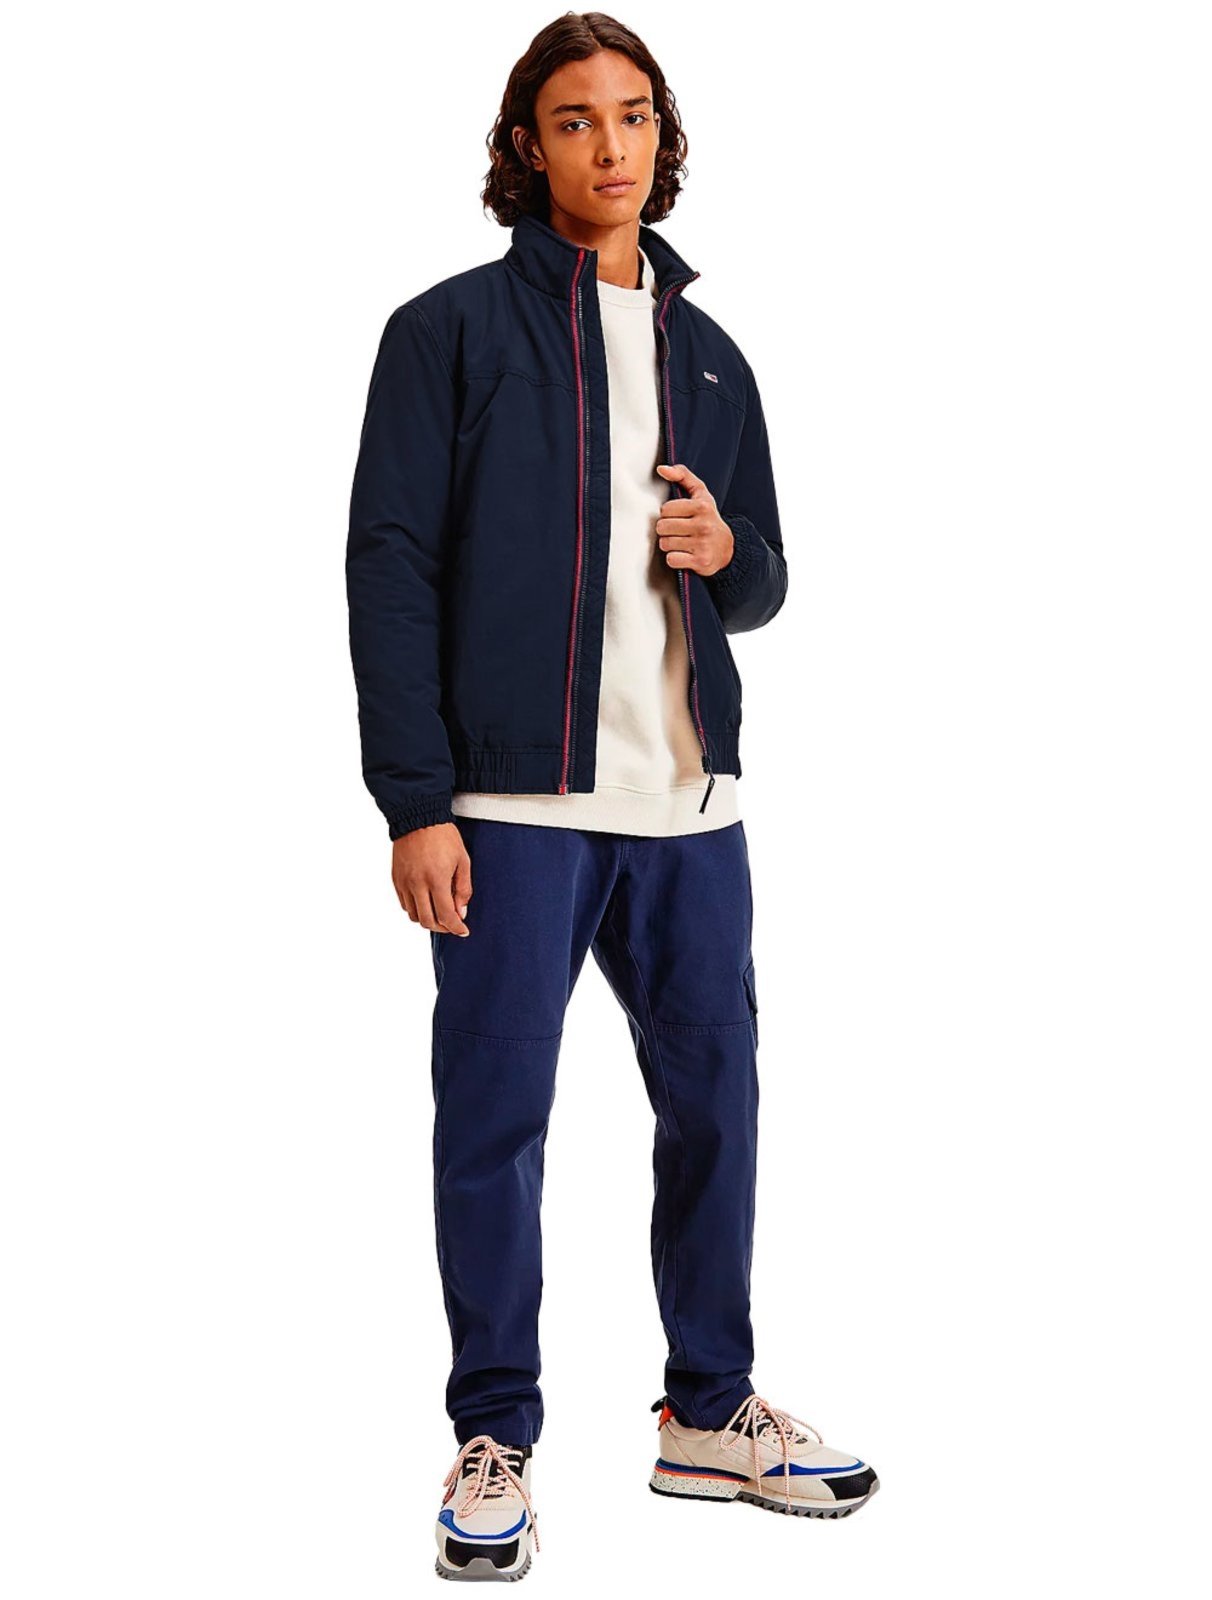 Jaqueta Tommy Jeans Masculina Essential Padded Azul Marinho - Compre Agora